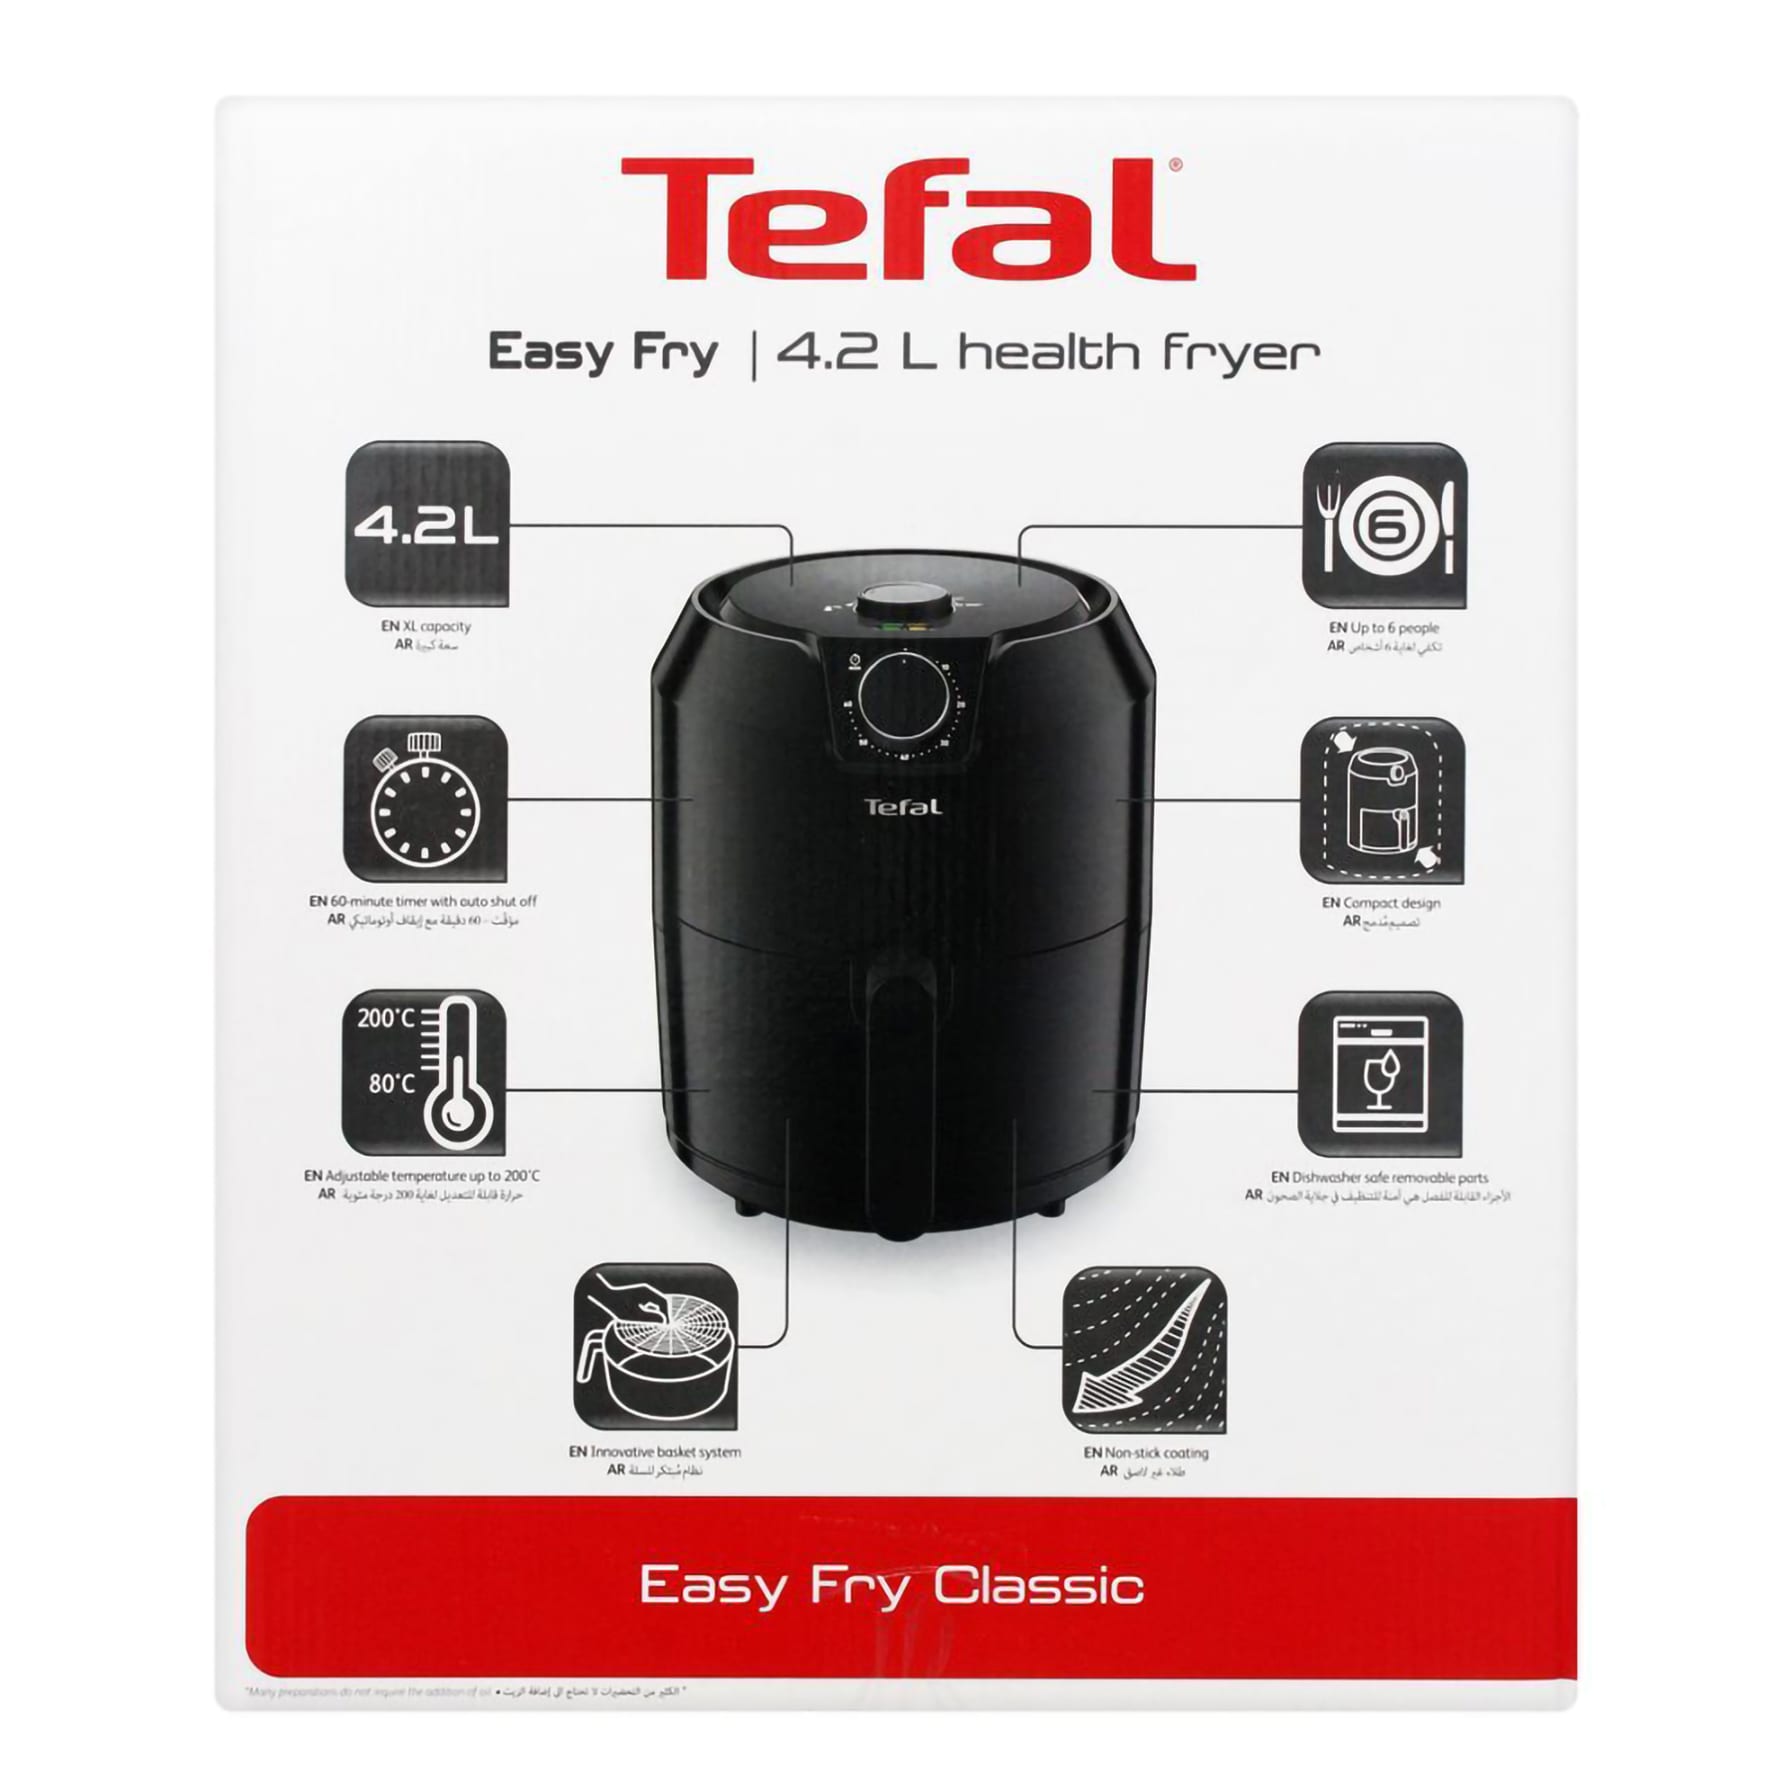 Tefal AIR FRYER Easy Fry Classique  4.2 Litre قلاية هوائية إيزي فراي من تيفال